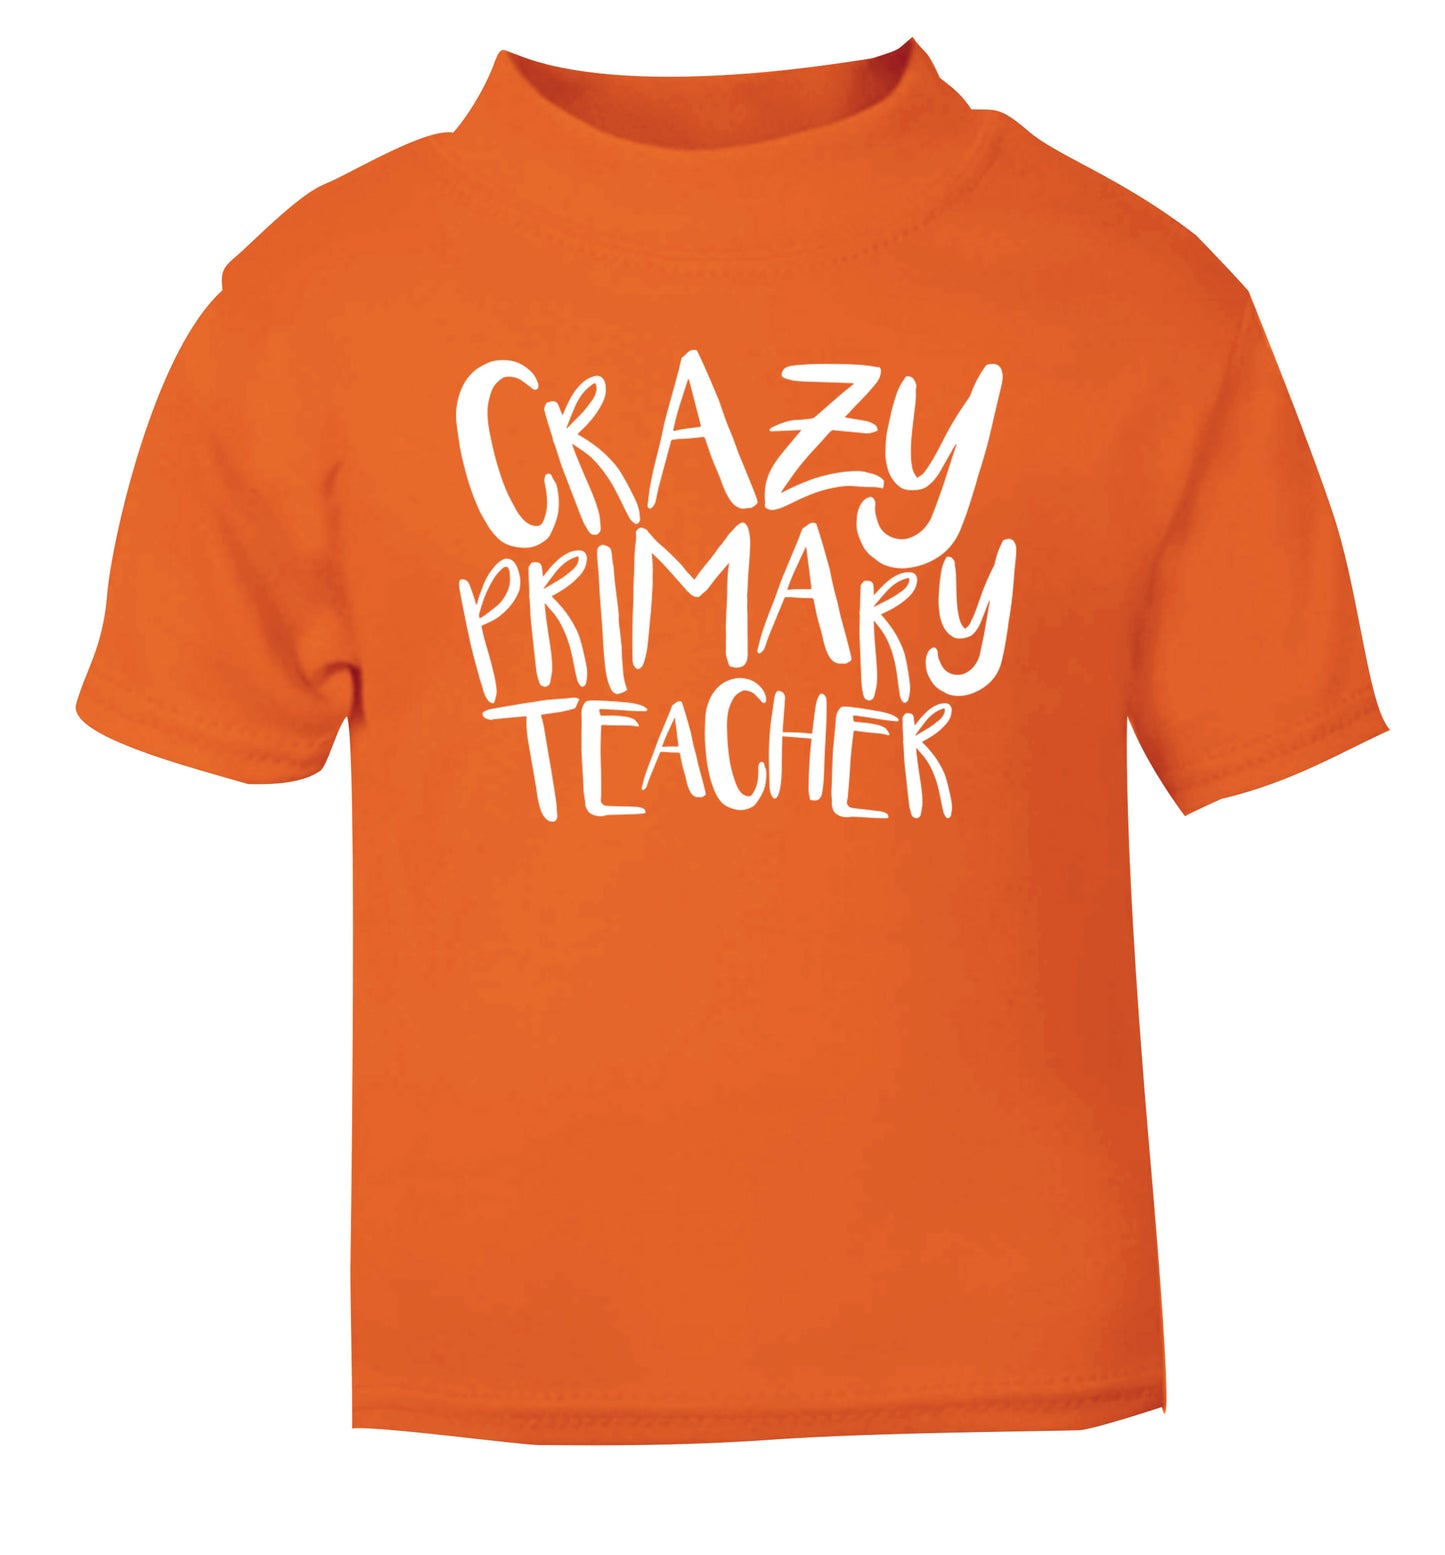 Crazy primary teacher orange Baby Toddler Tshirt 2 Years